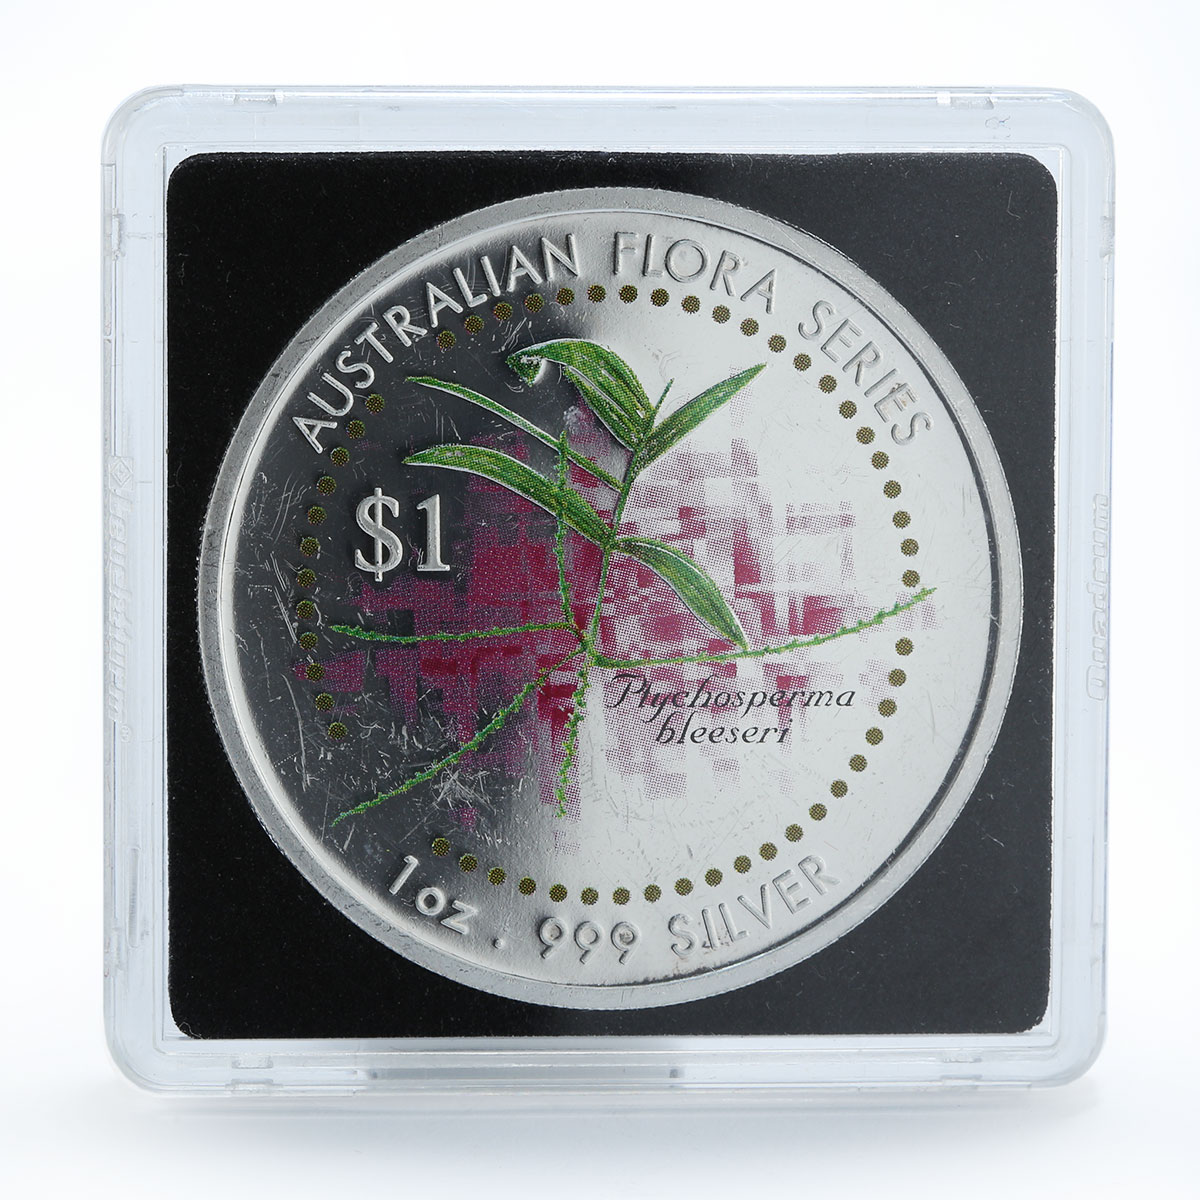 Cook Islands 1 dollar Ptychosperma bleeseri Australian flora silver coin 1999